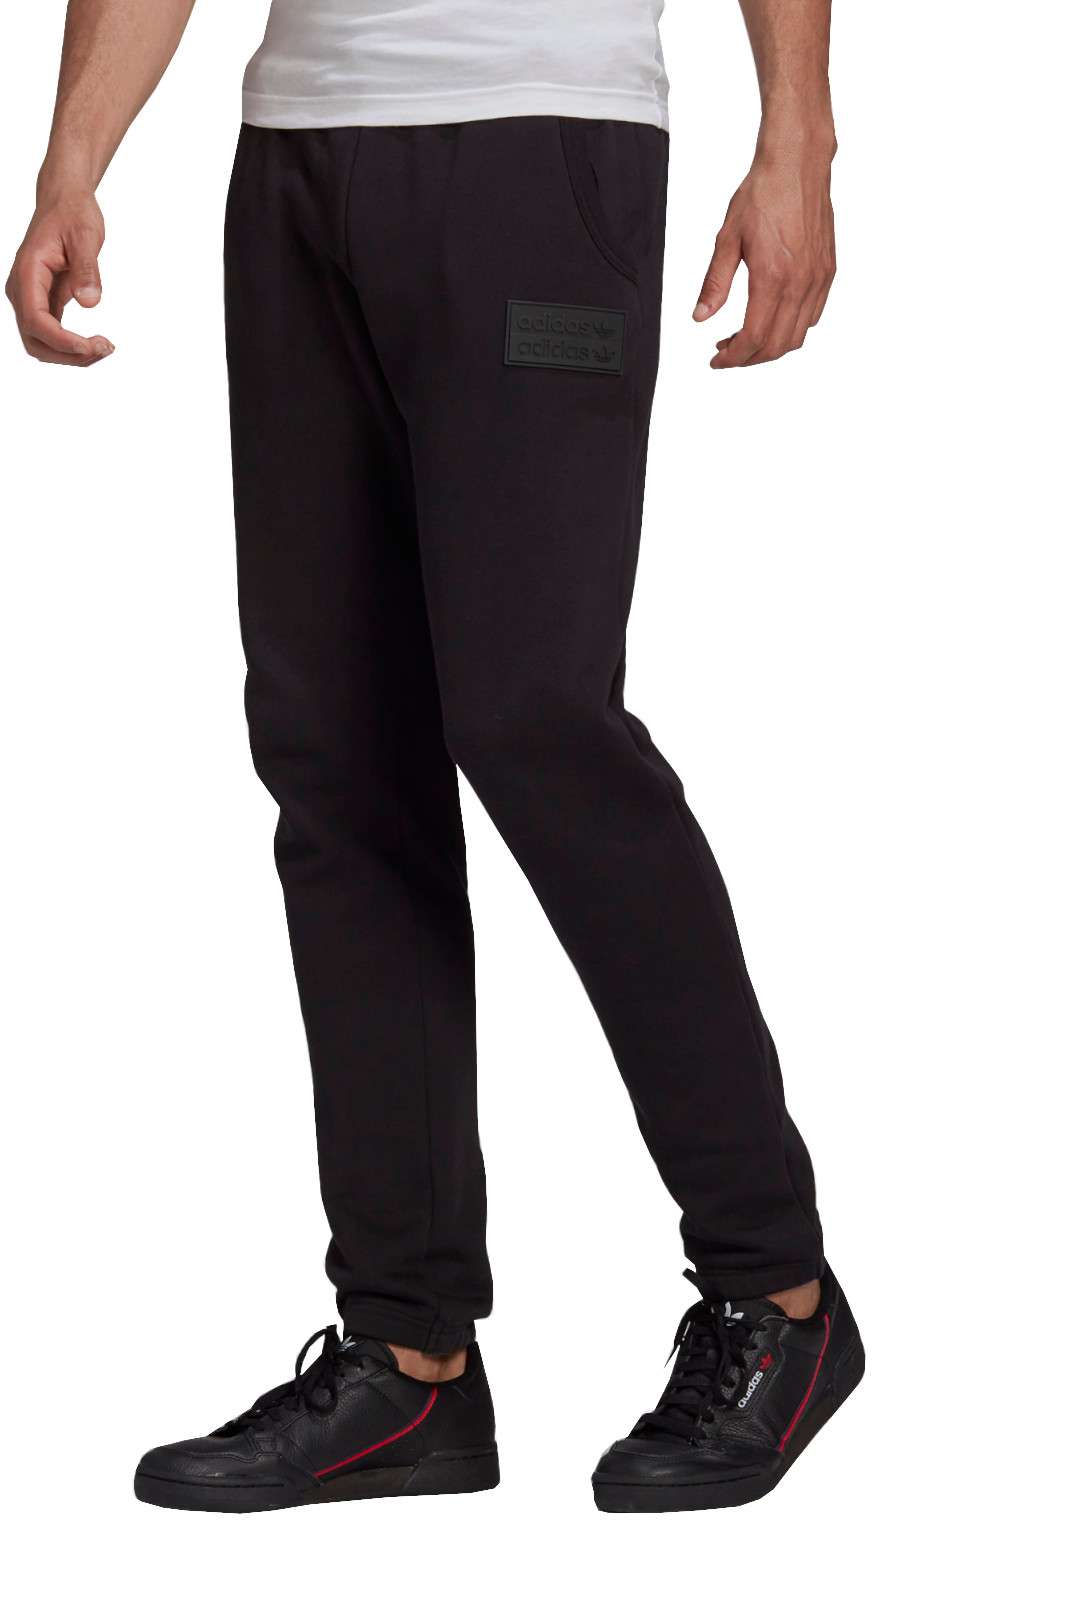 Adidas pantalone uomo SILICON SWEAT PANTS